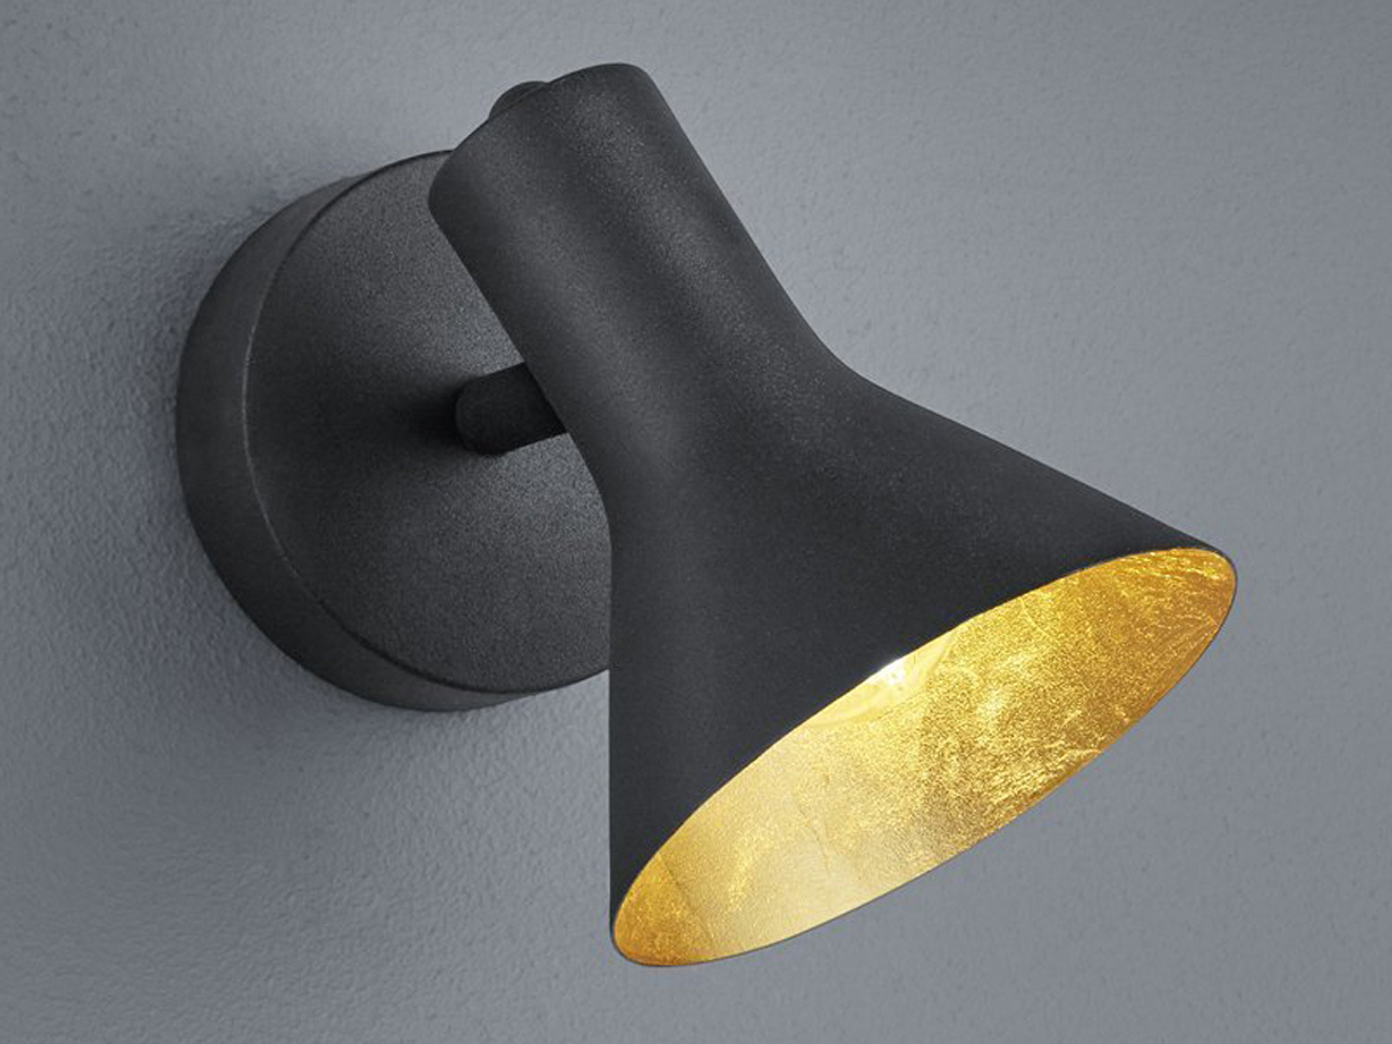 Retro Wandlampe in Schwarz-Gold schwenkbar Deckenlampe E14 Wandlampe Design 